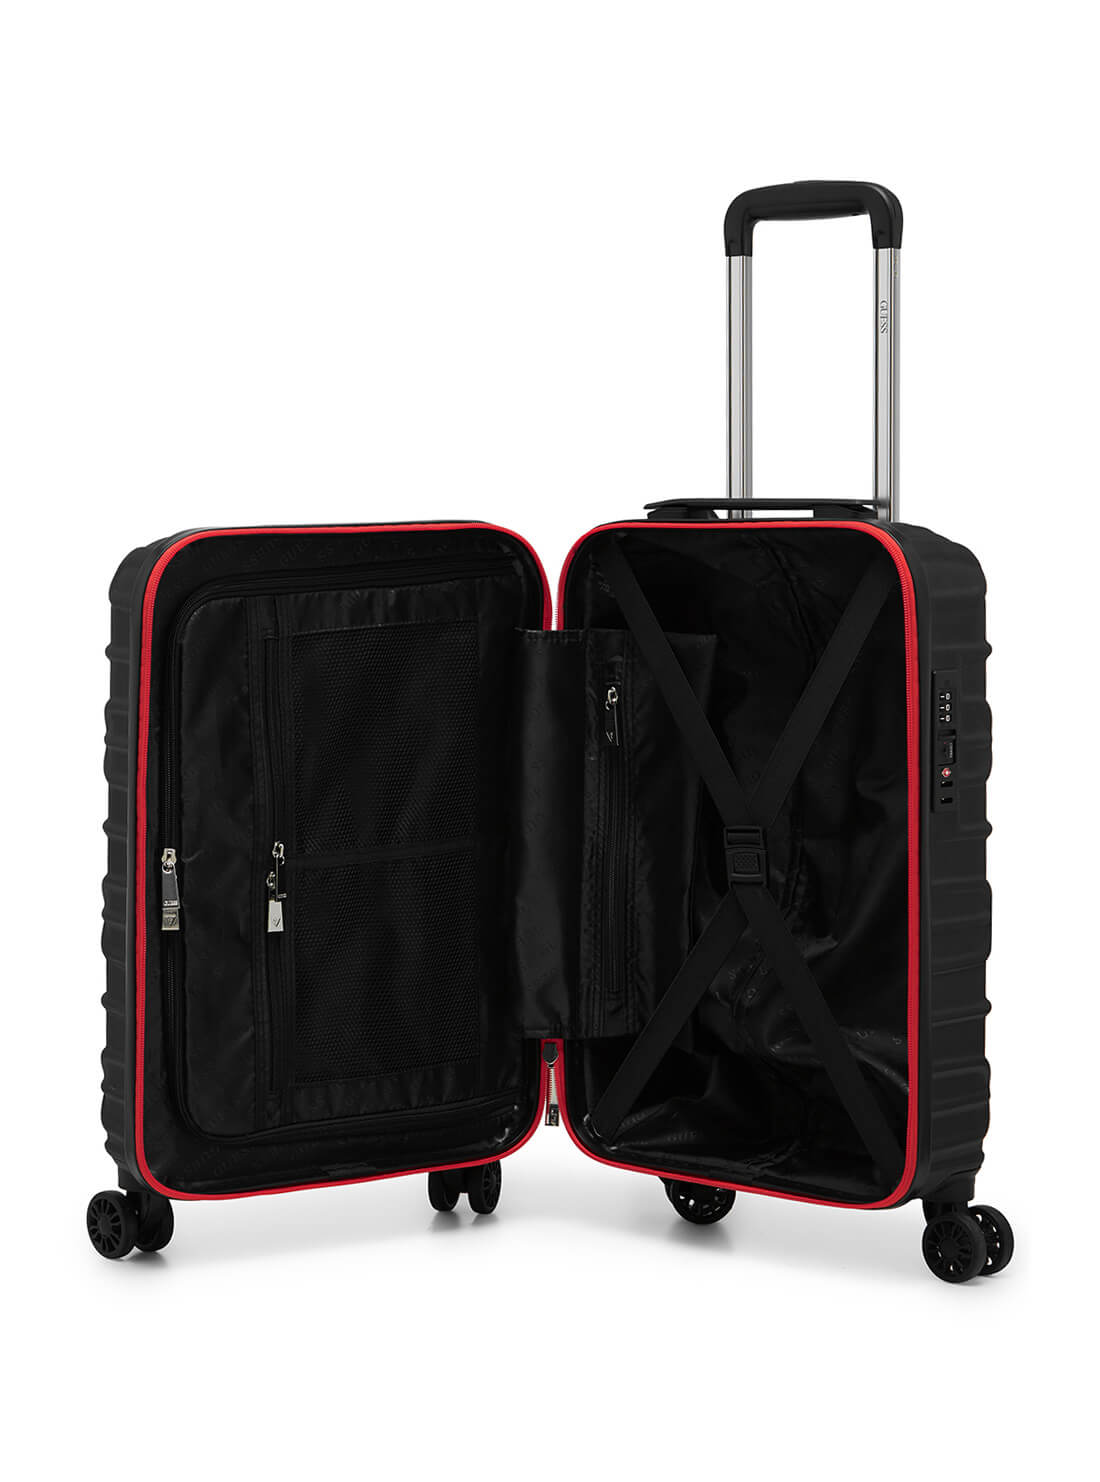 Black Le Disko 53cm Suitcase | GUESS Luggage | inside view